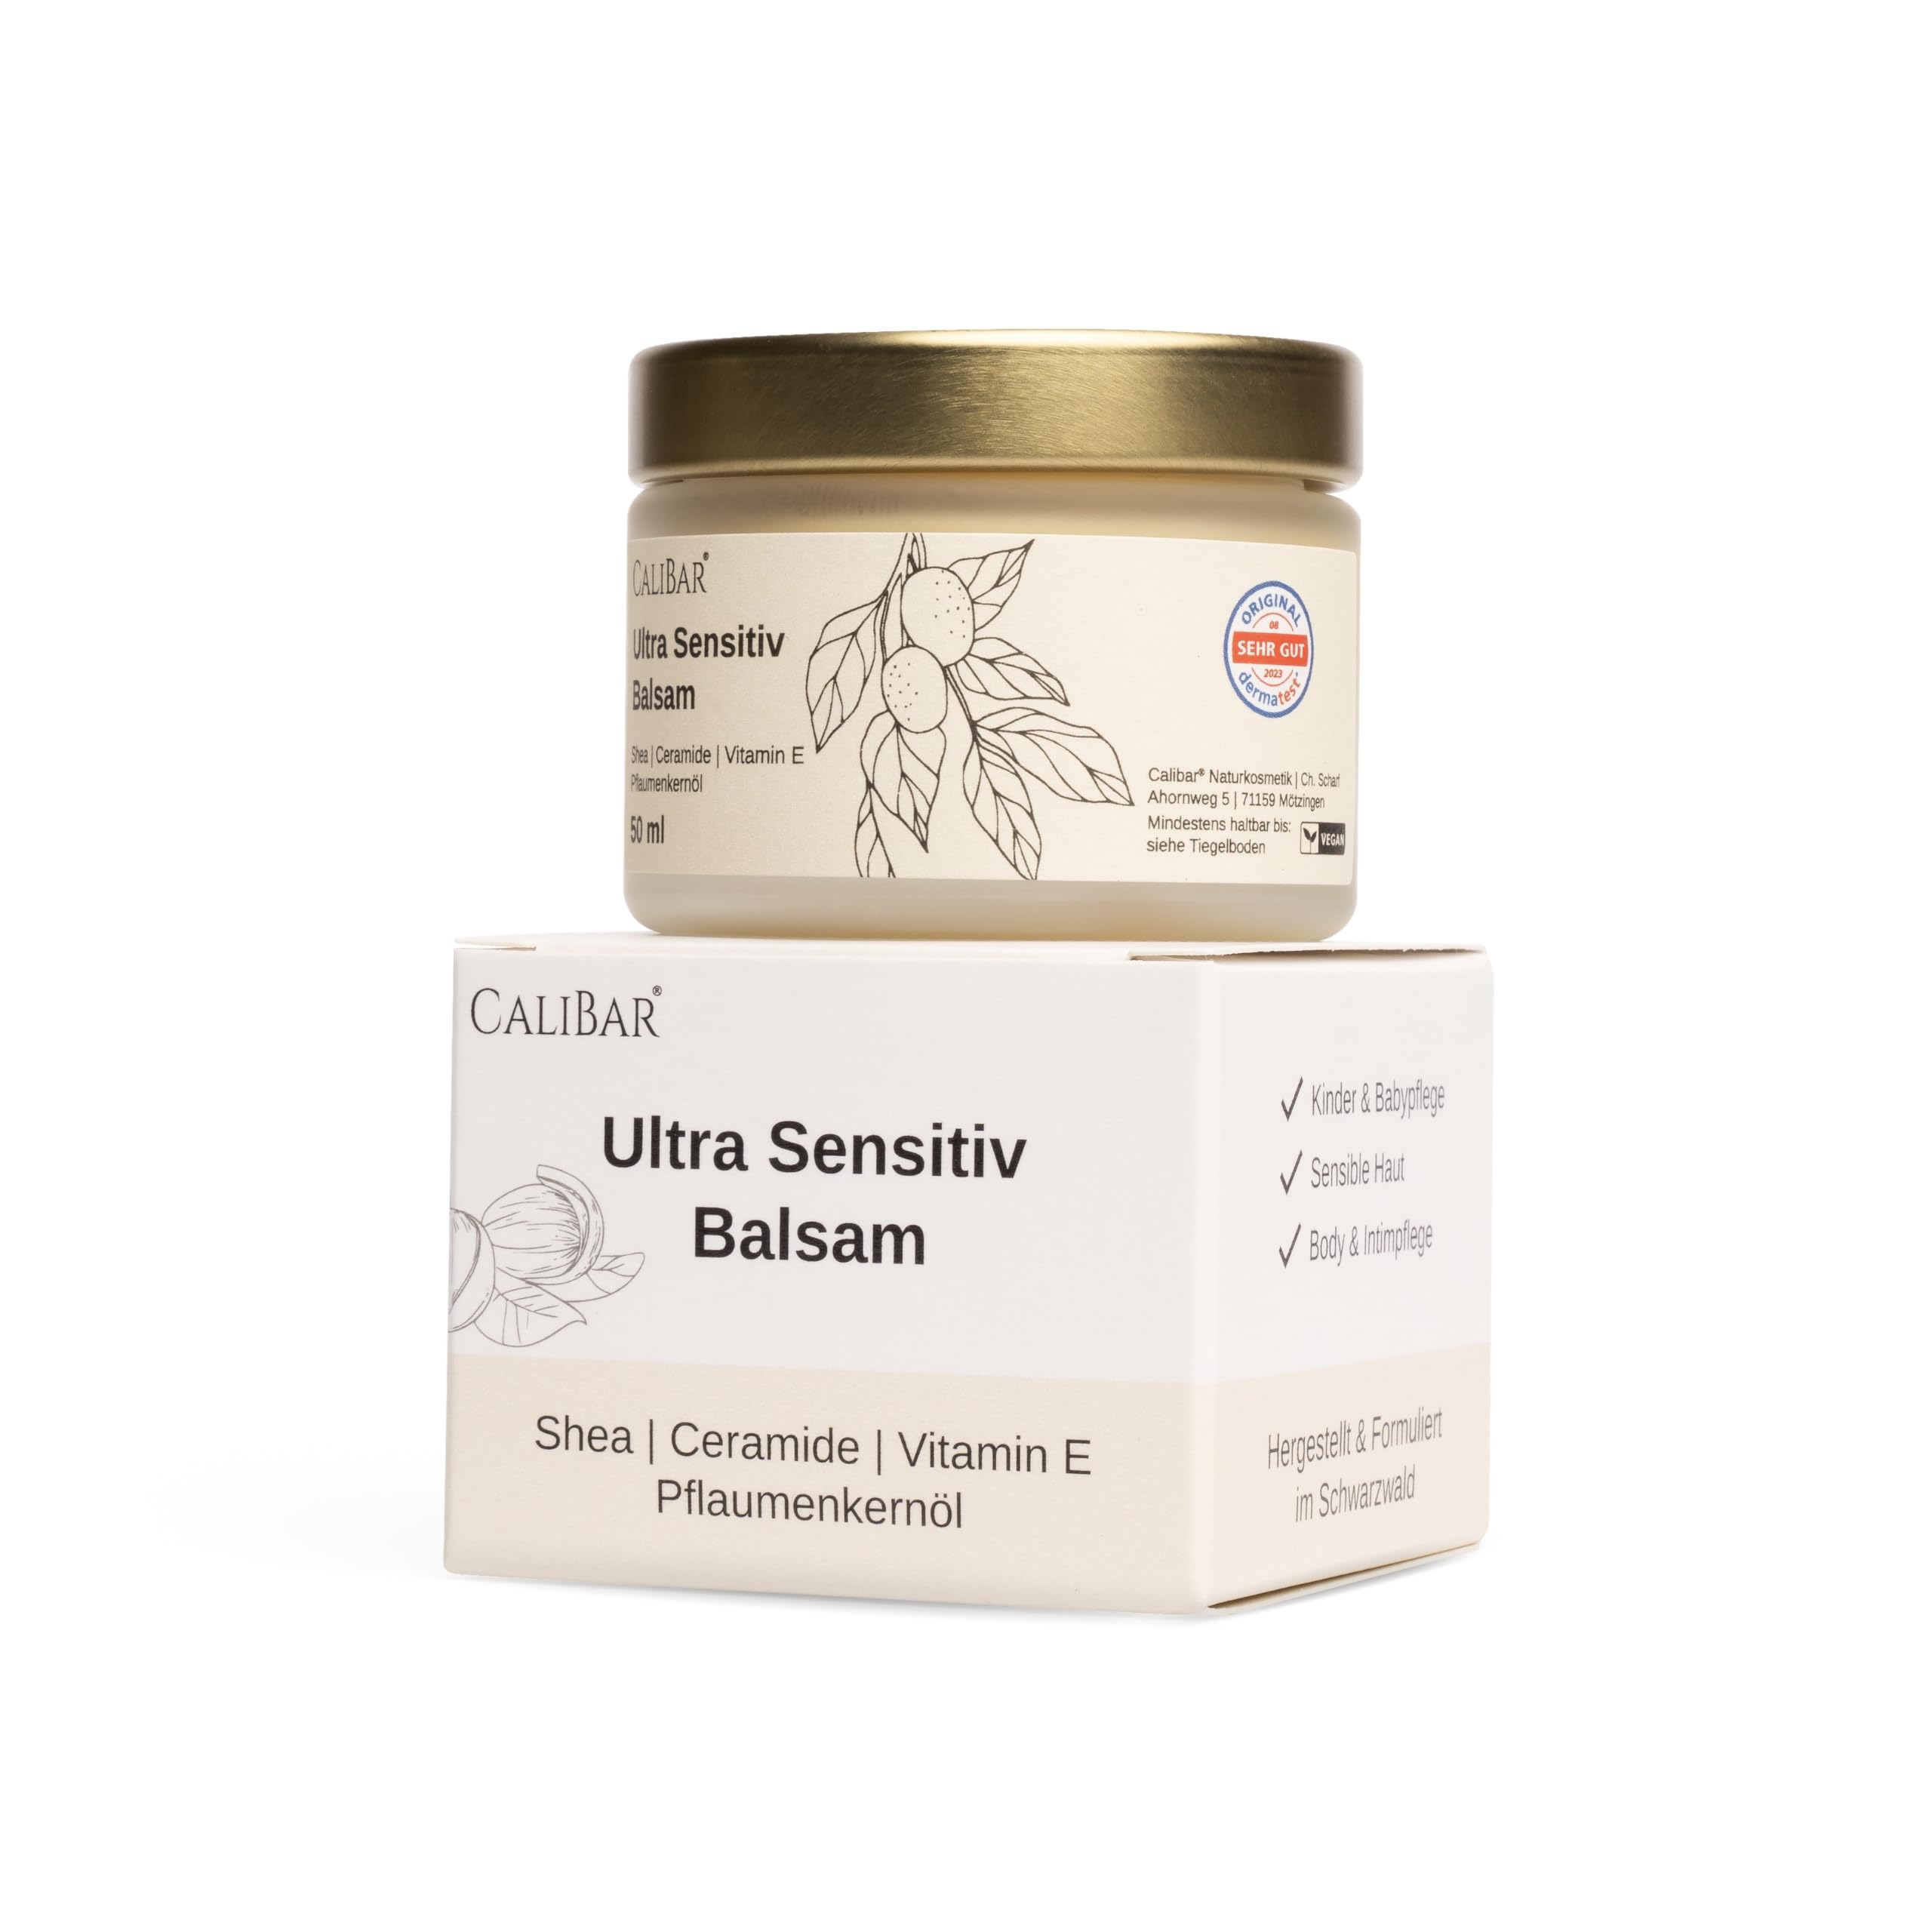 Calibar Ultra Sensitiv Balsam - Hautbalsam, Babypflege, Windelpflege, Intimpflege, Intensivpflege, Sensitiv, Gesicht und Körper, Parfümfrei, 50ml